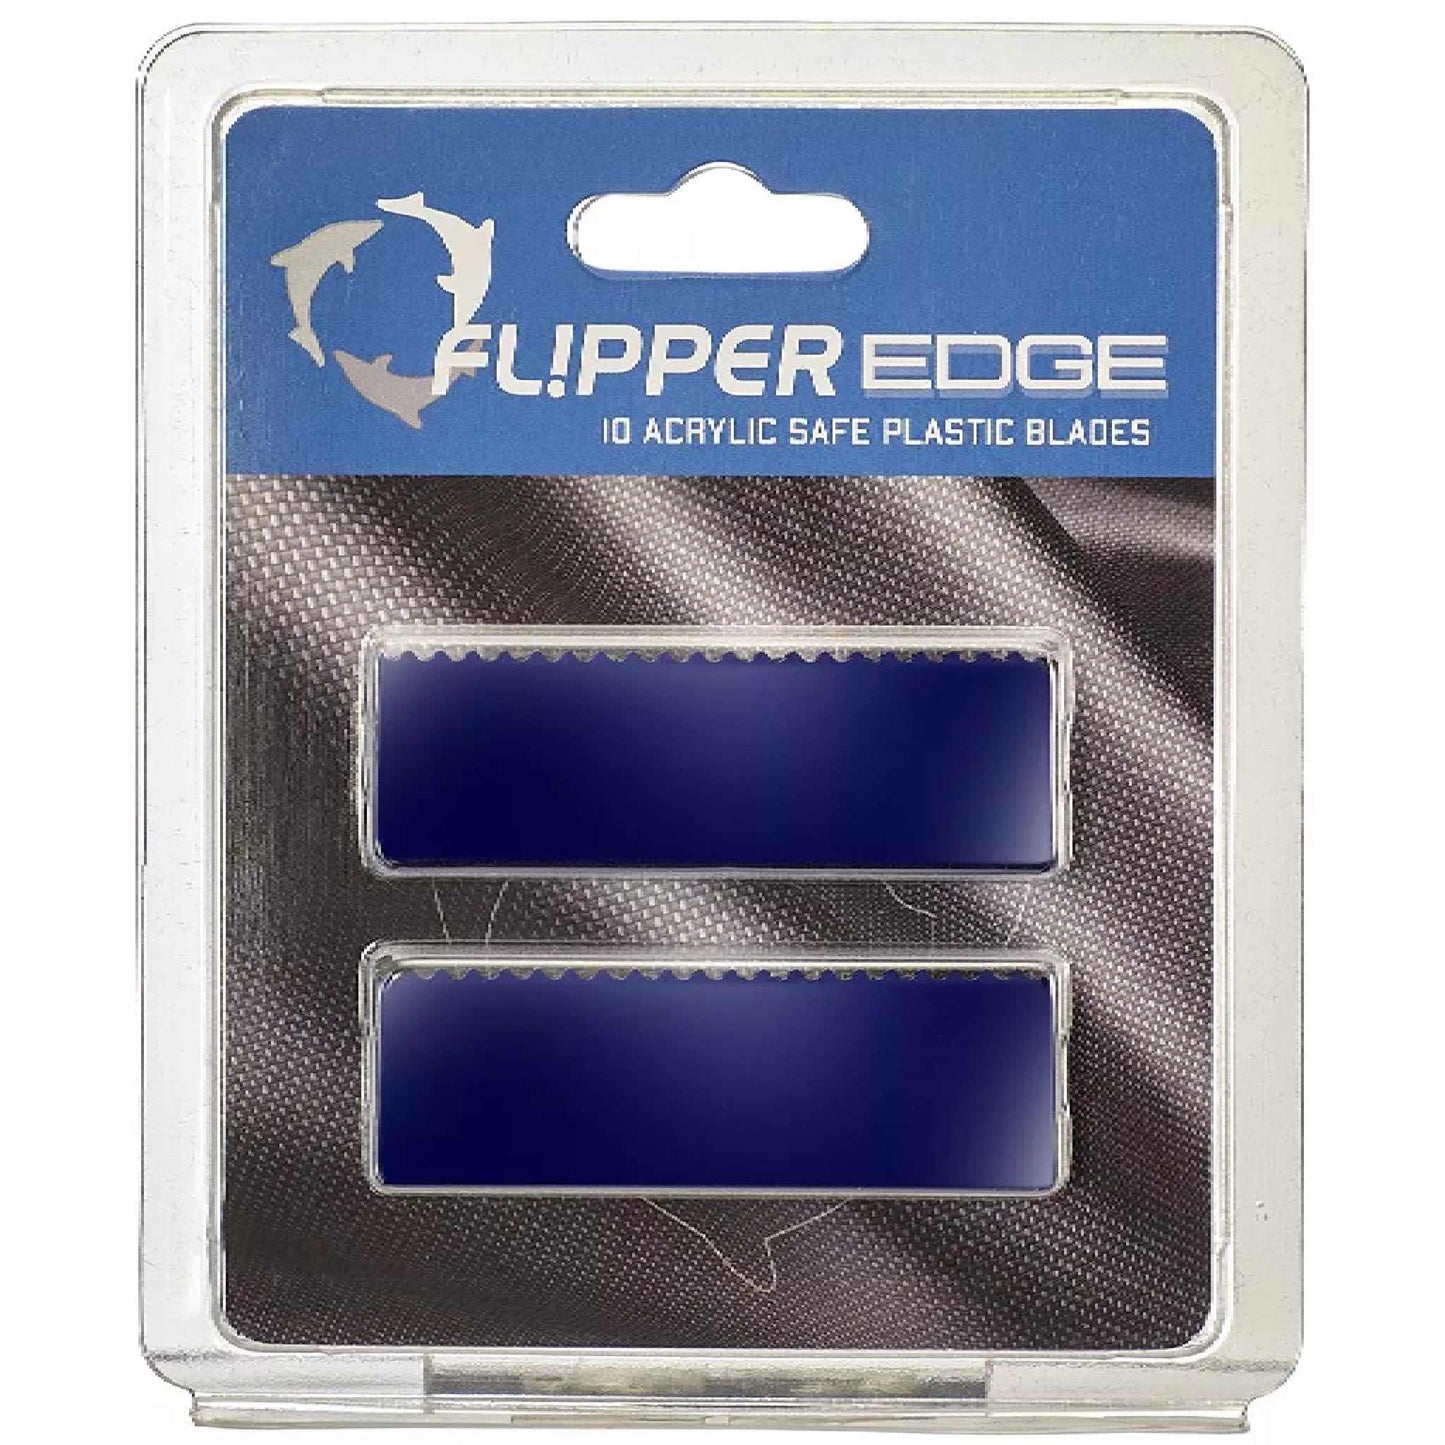 Flipper Edge Acrylic Safe Plastic Blades - 10pk